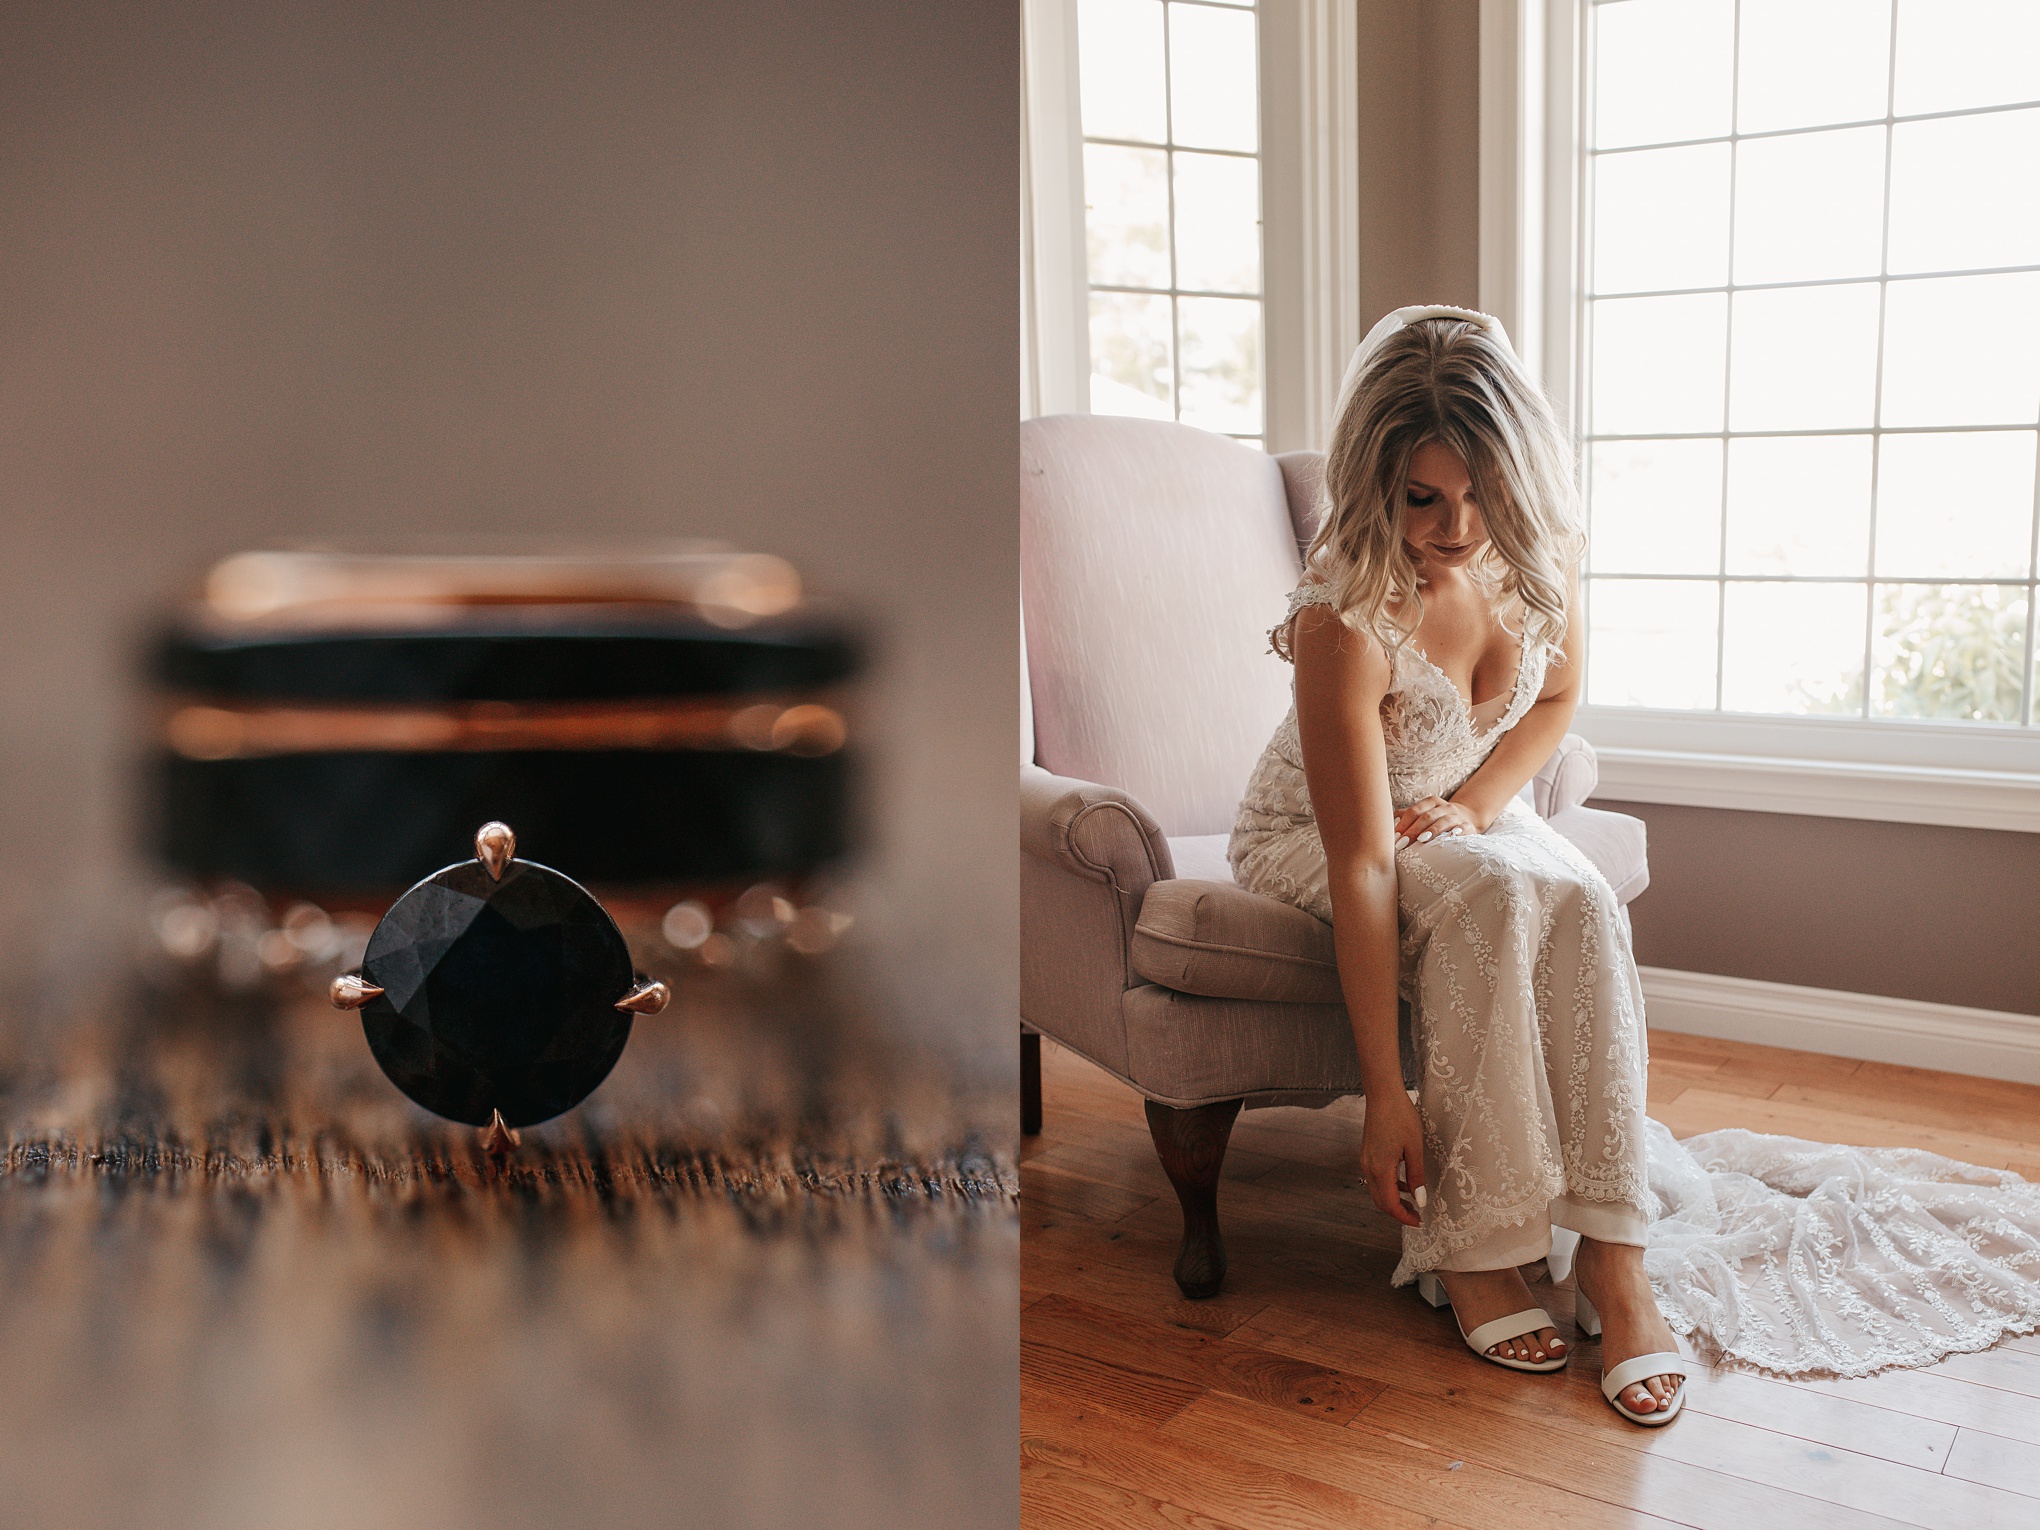 black diamond and copper wedding ring